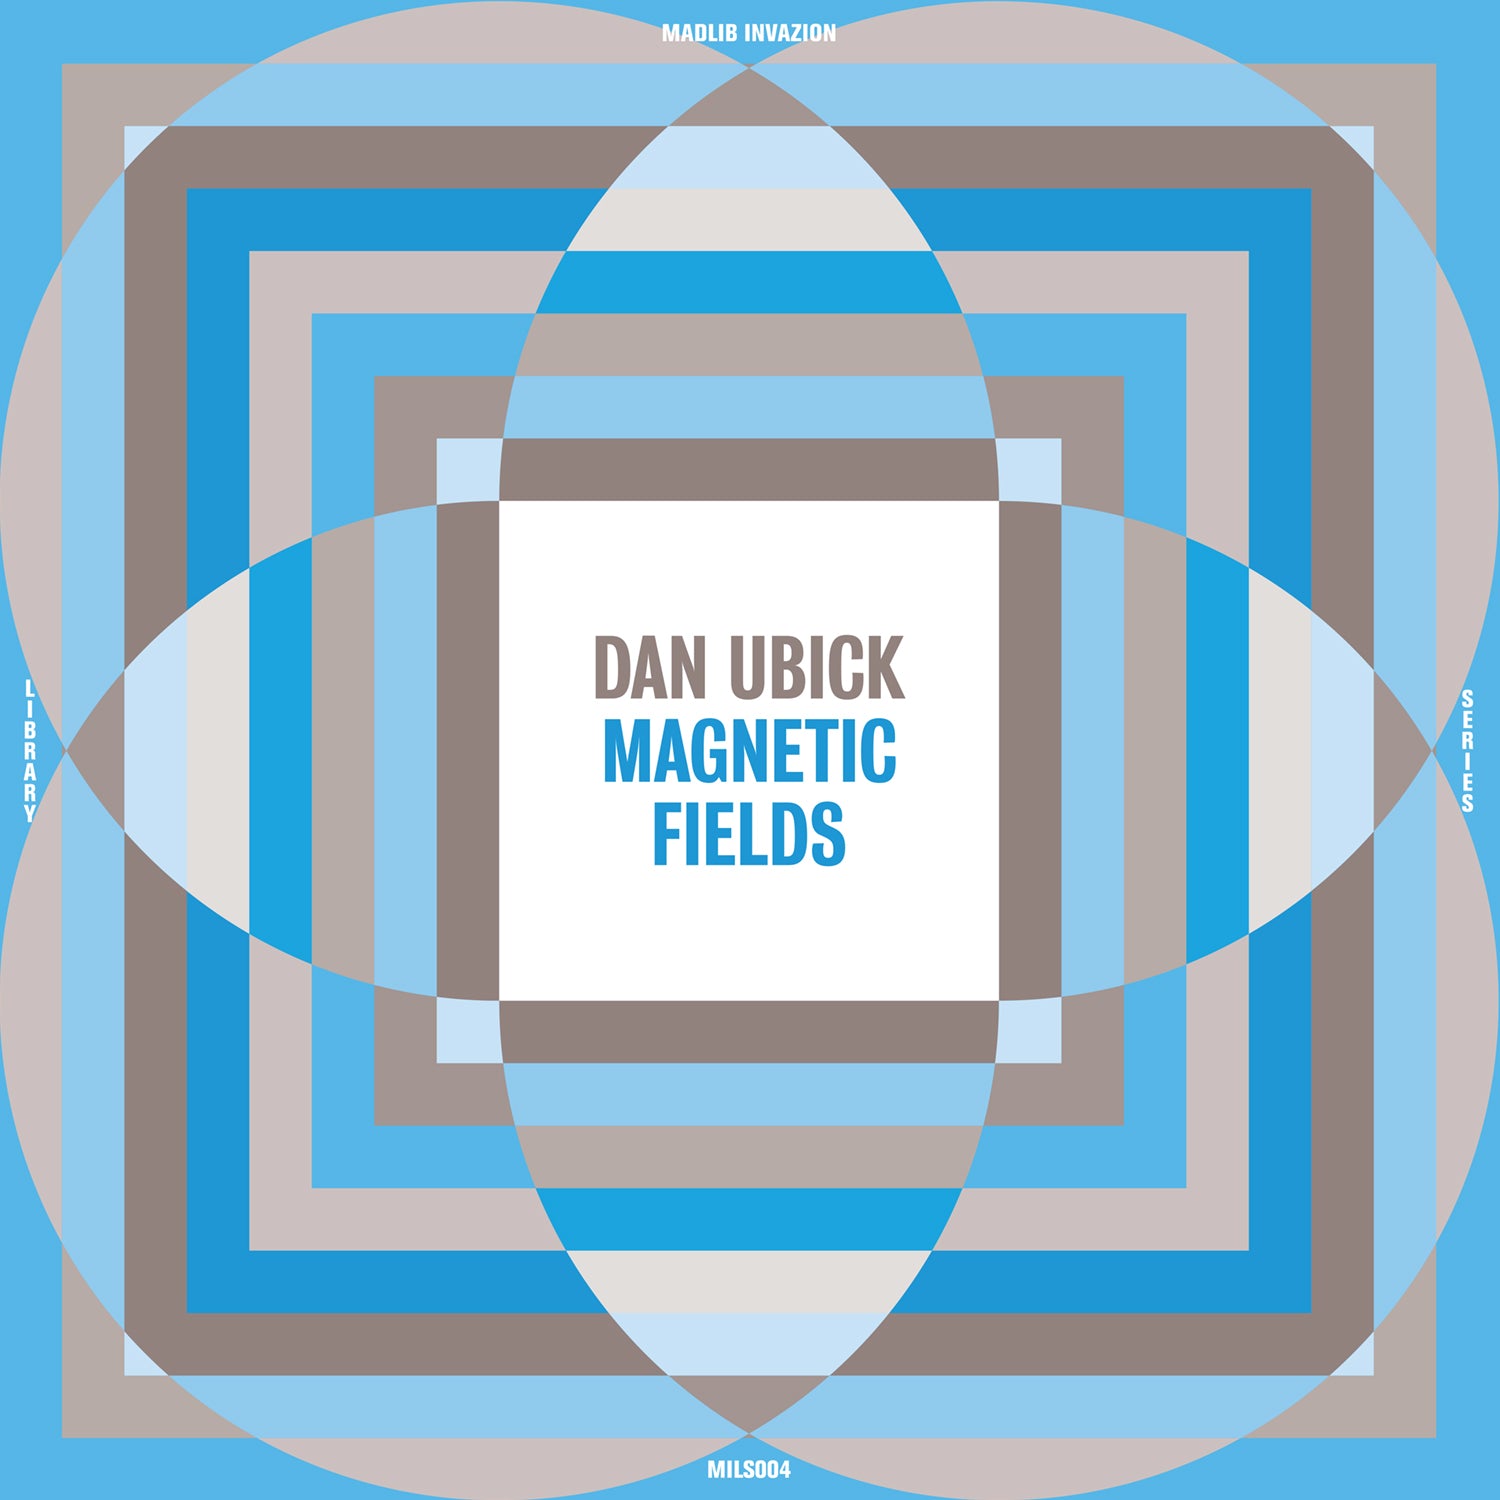 Dan Ubick - Magnetic Fields (Madlib Invazion Music Library Series #4)